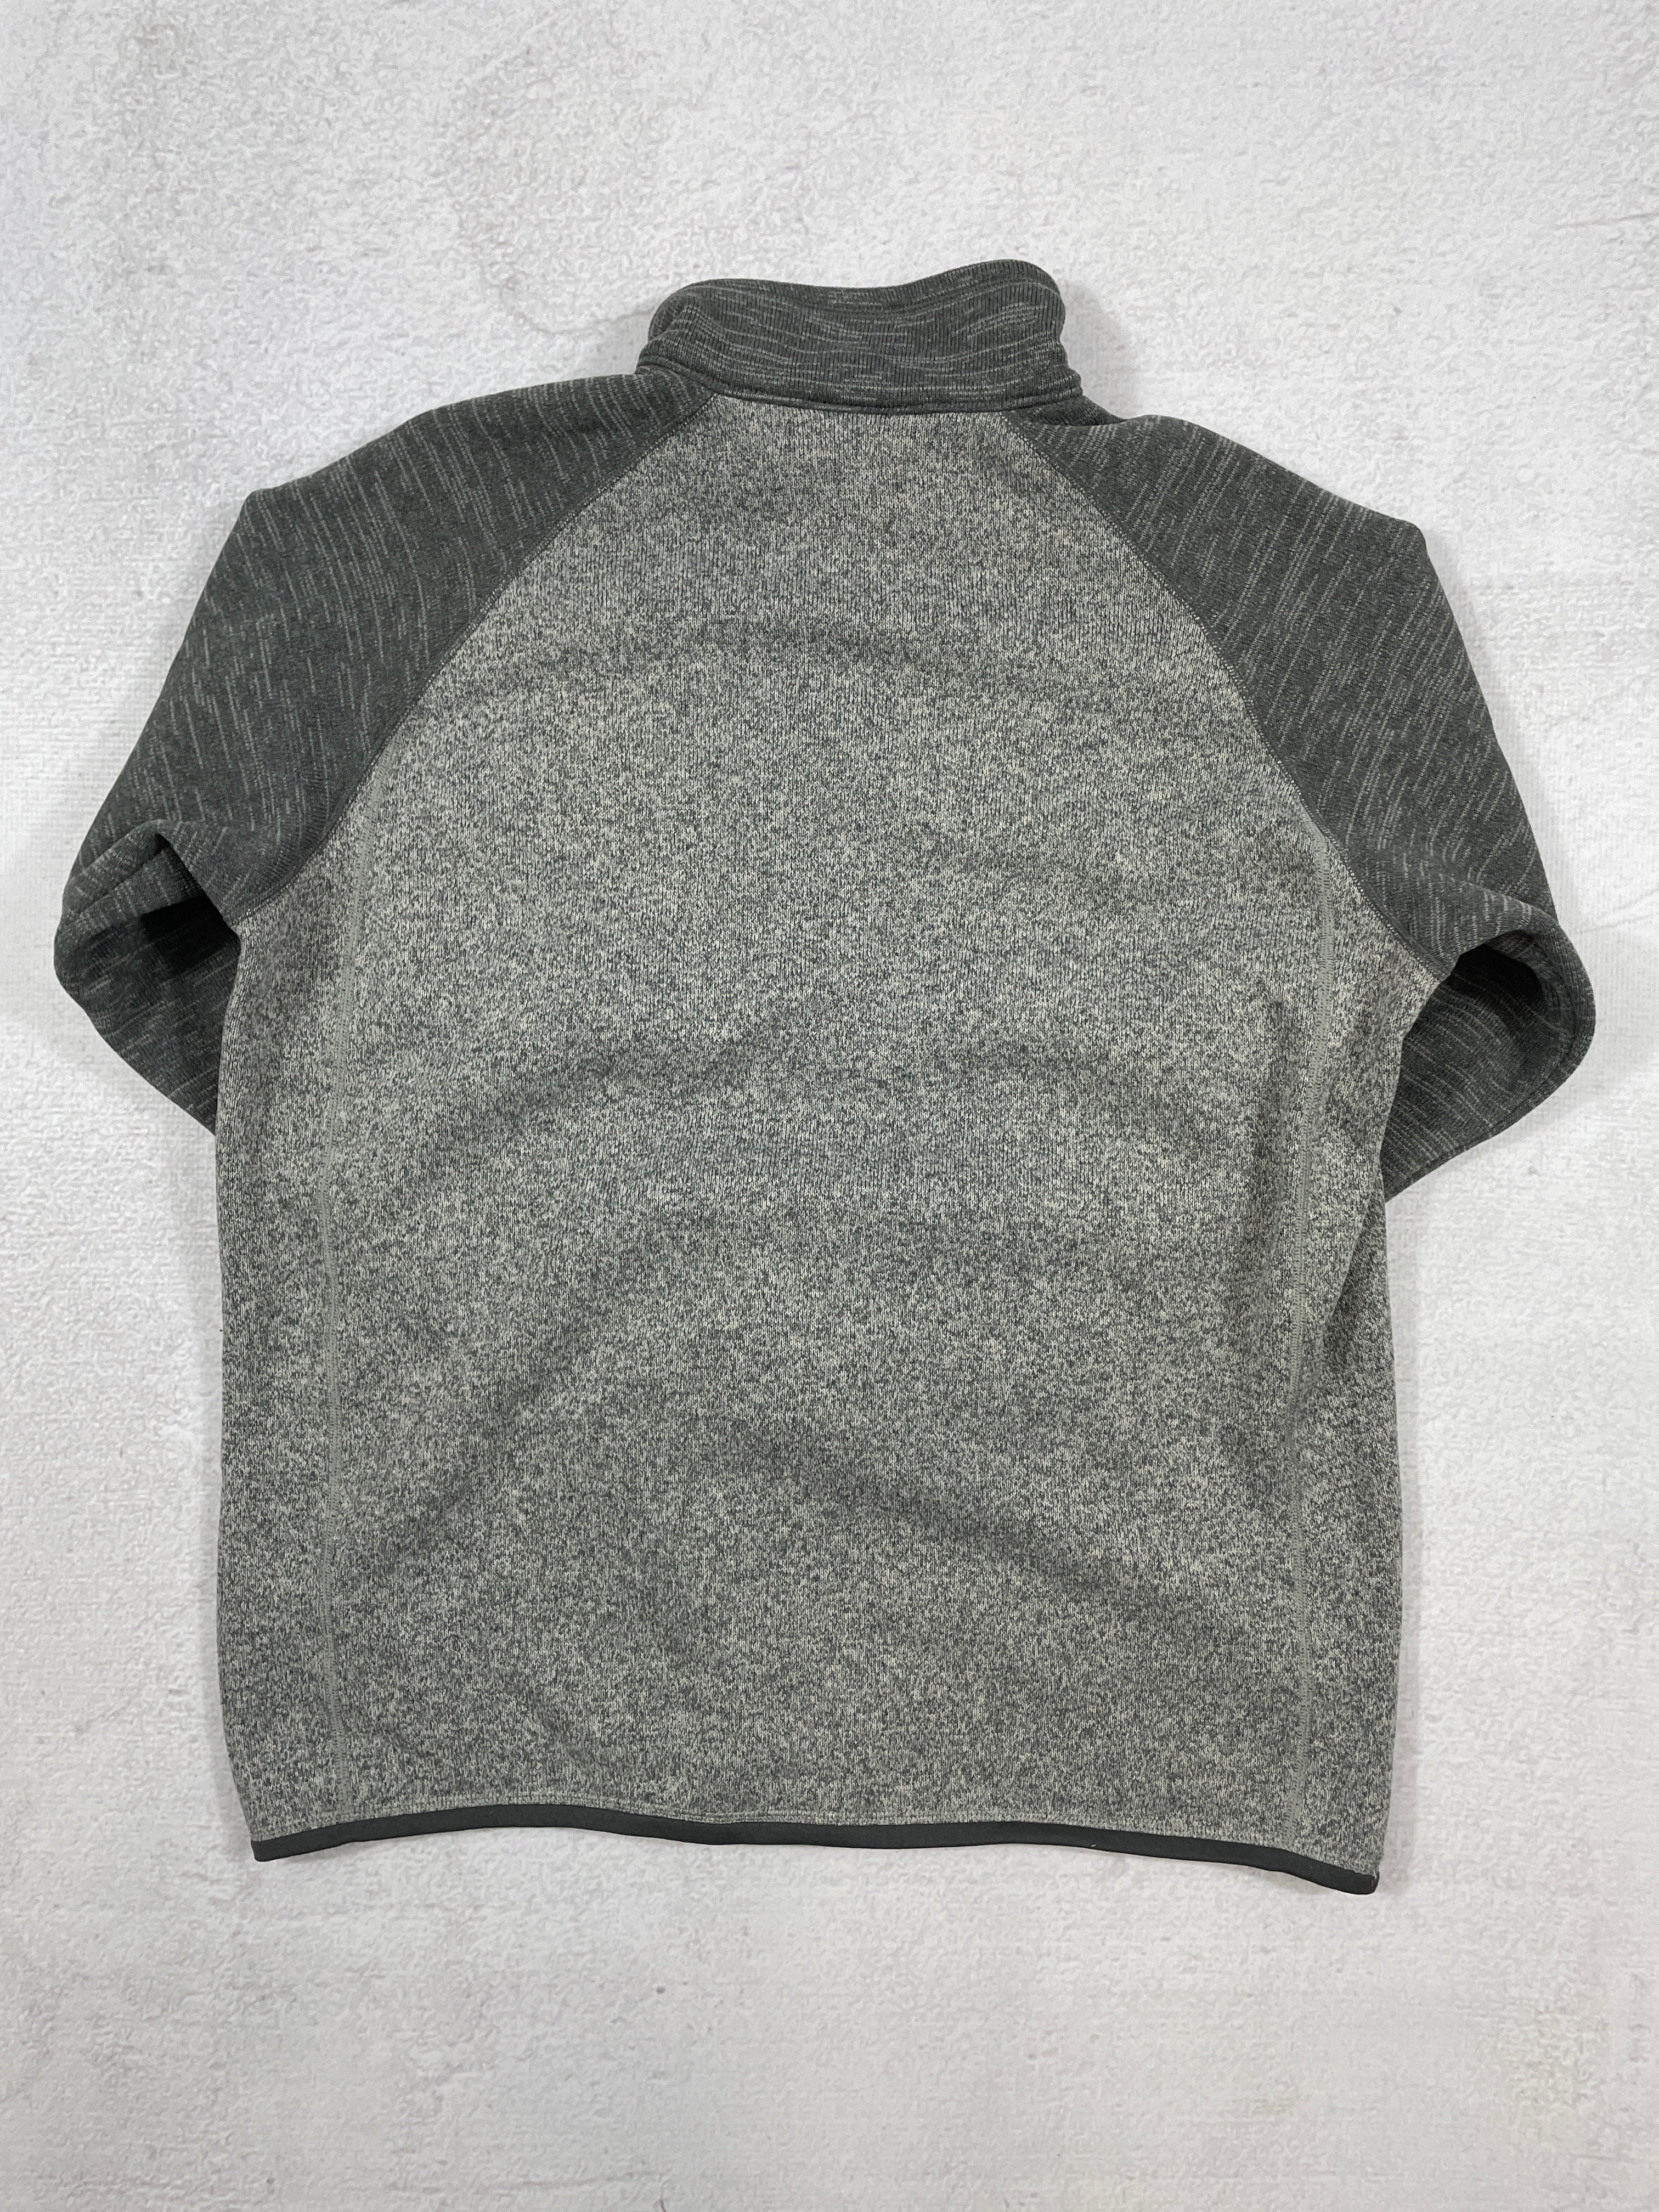 Vintage Patagonia 1/4 Zip Sweatshirt - Men's 2XL